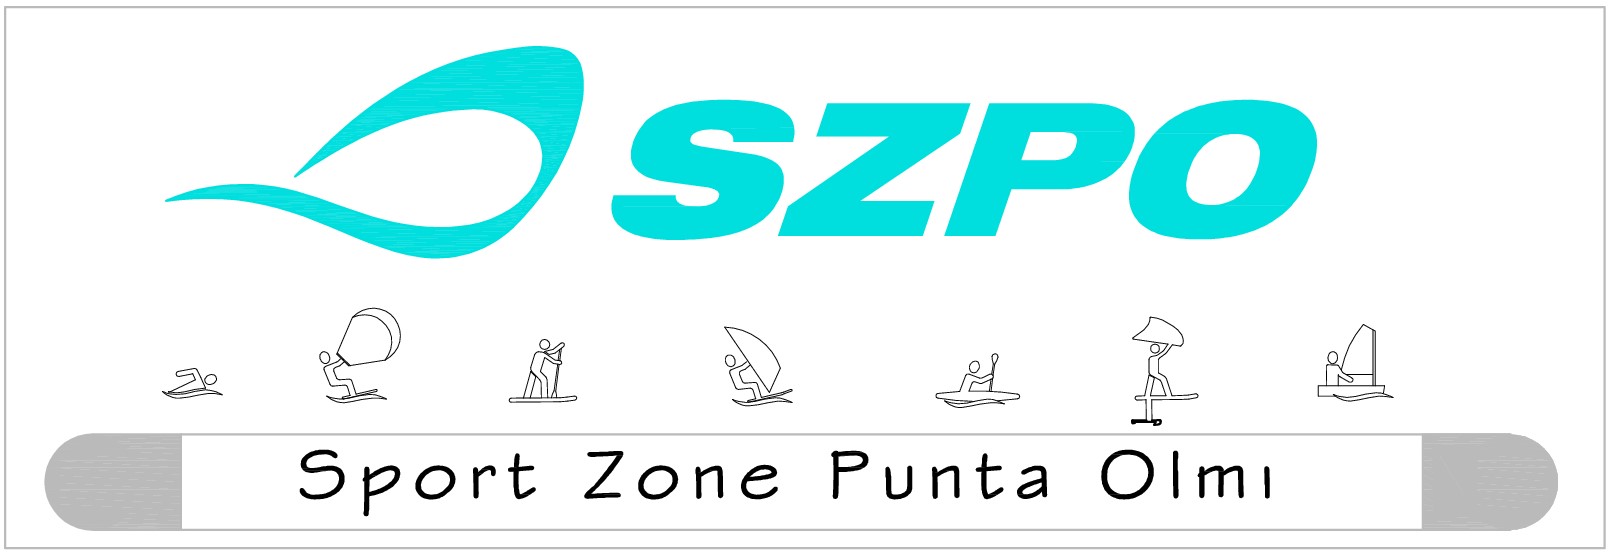 Sport Zone Punta Olmi 